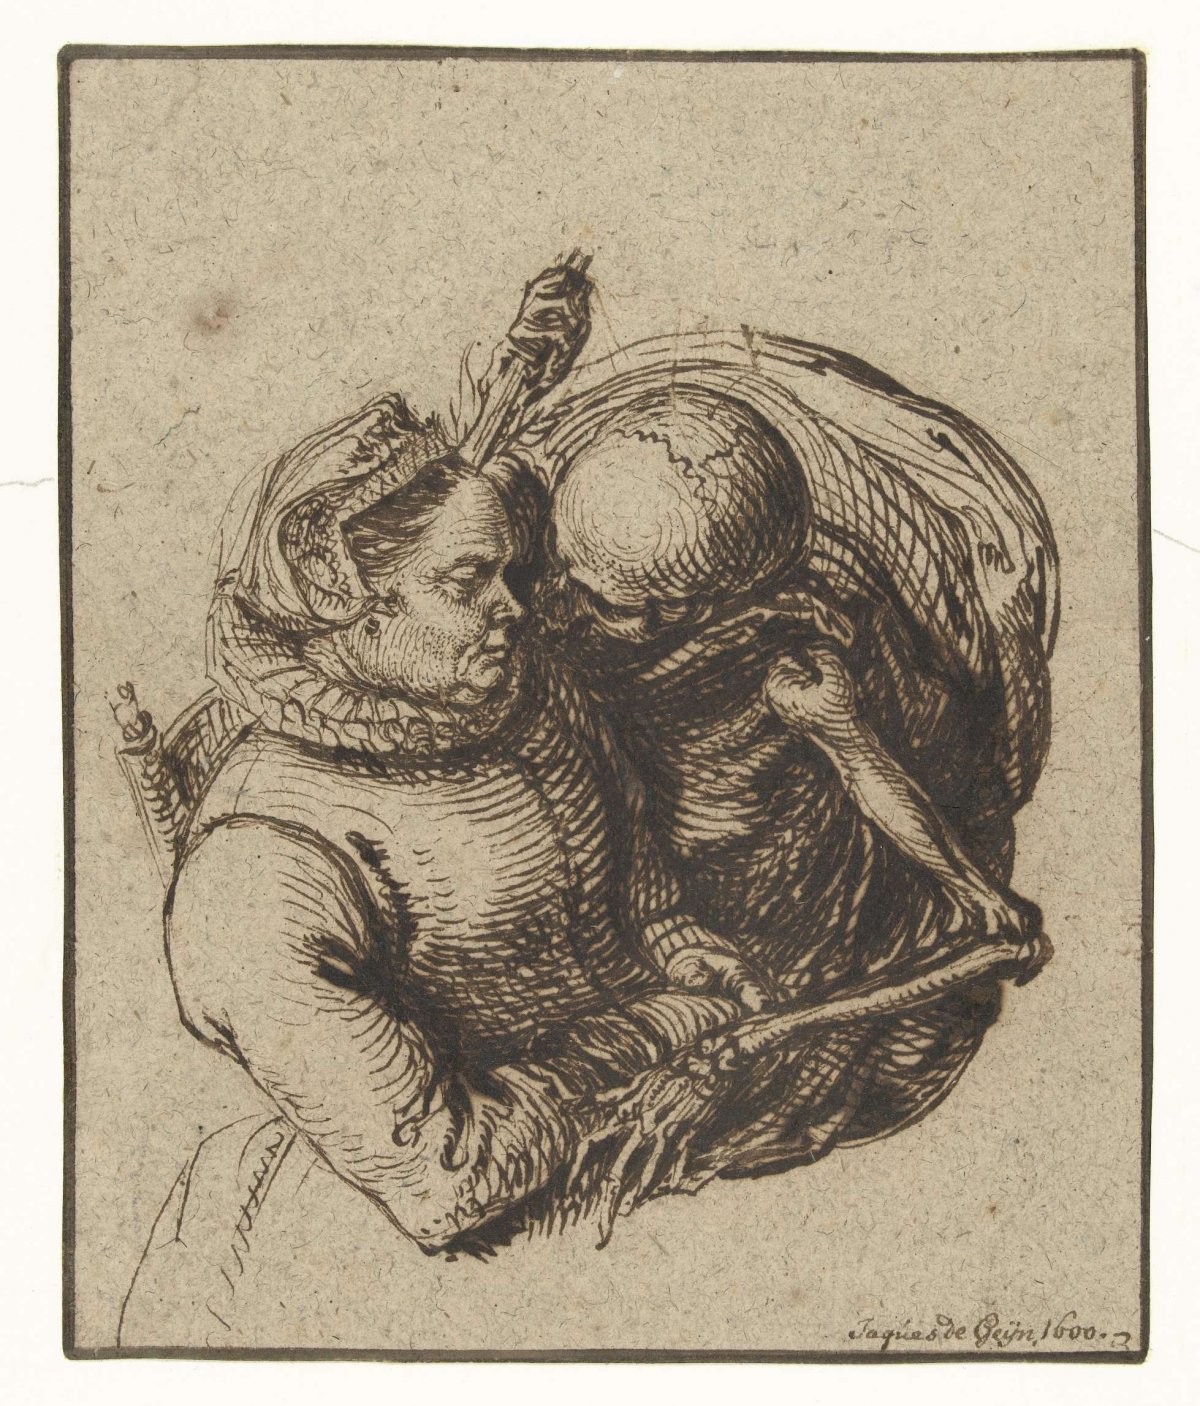 Woman and Death, Jacques de Gheyn (II), 1600